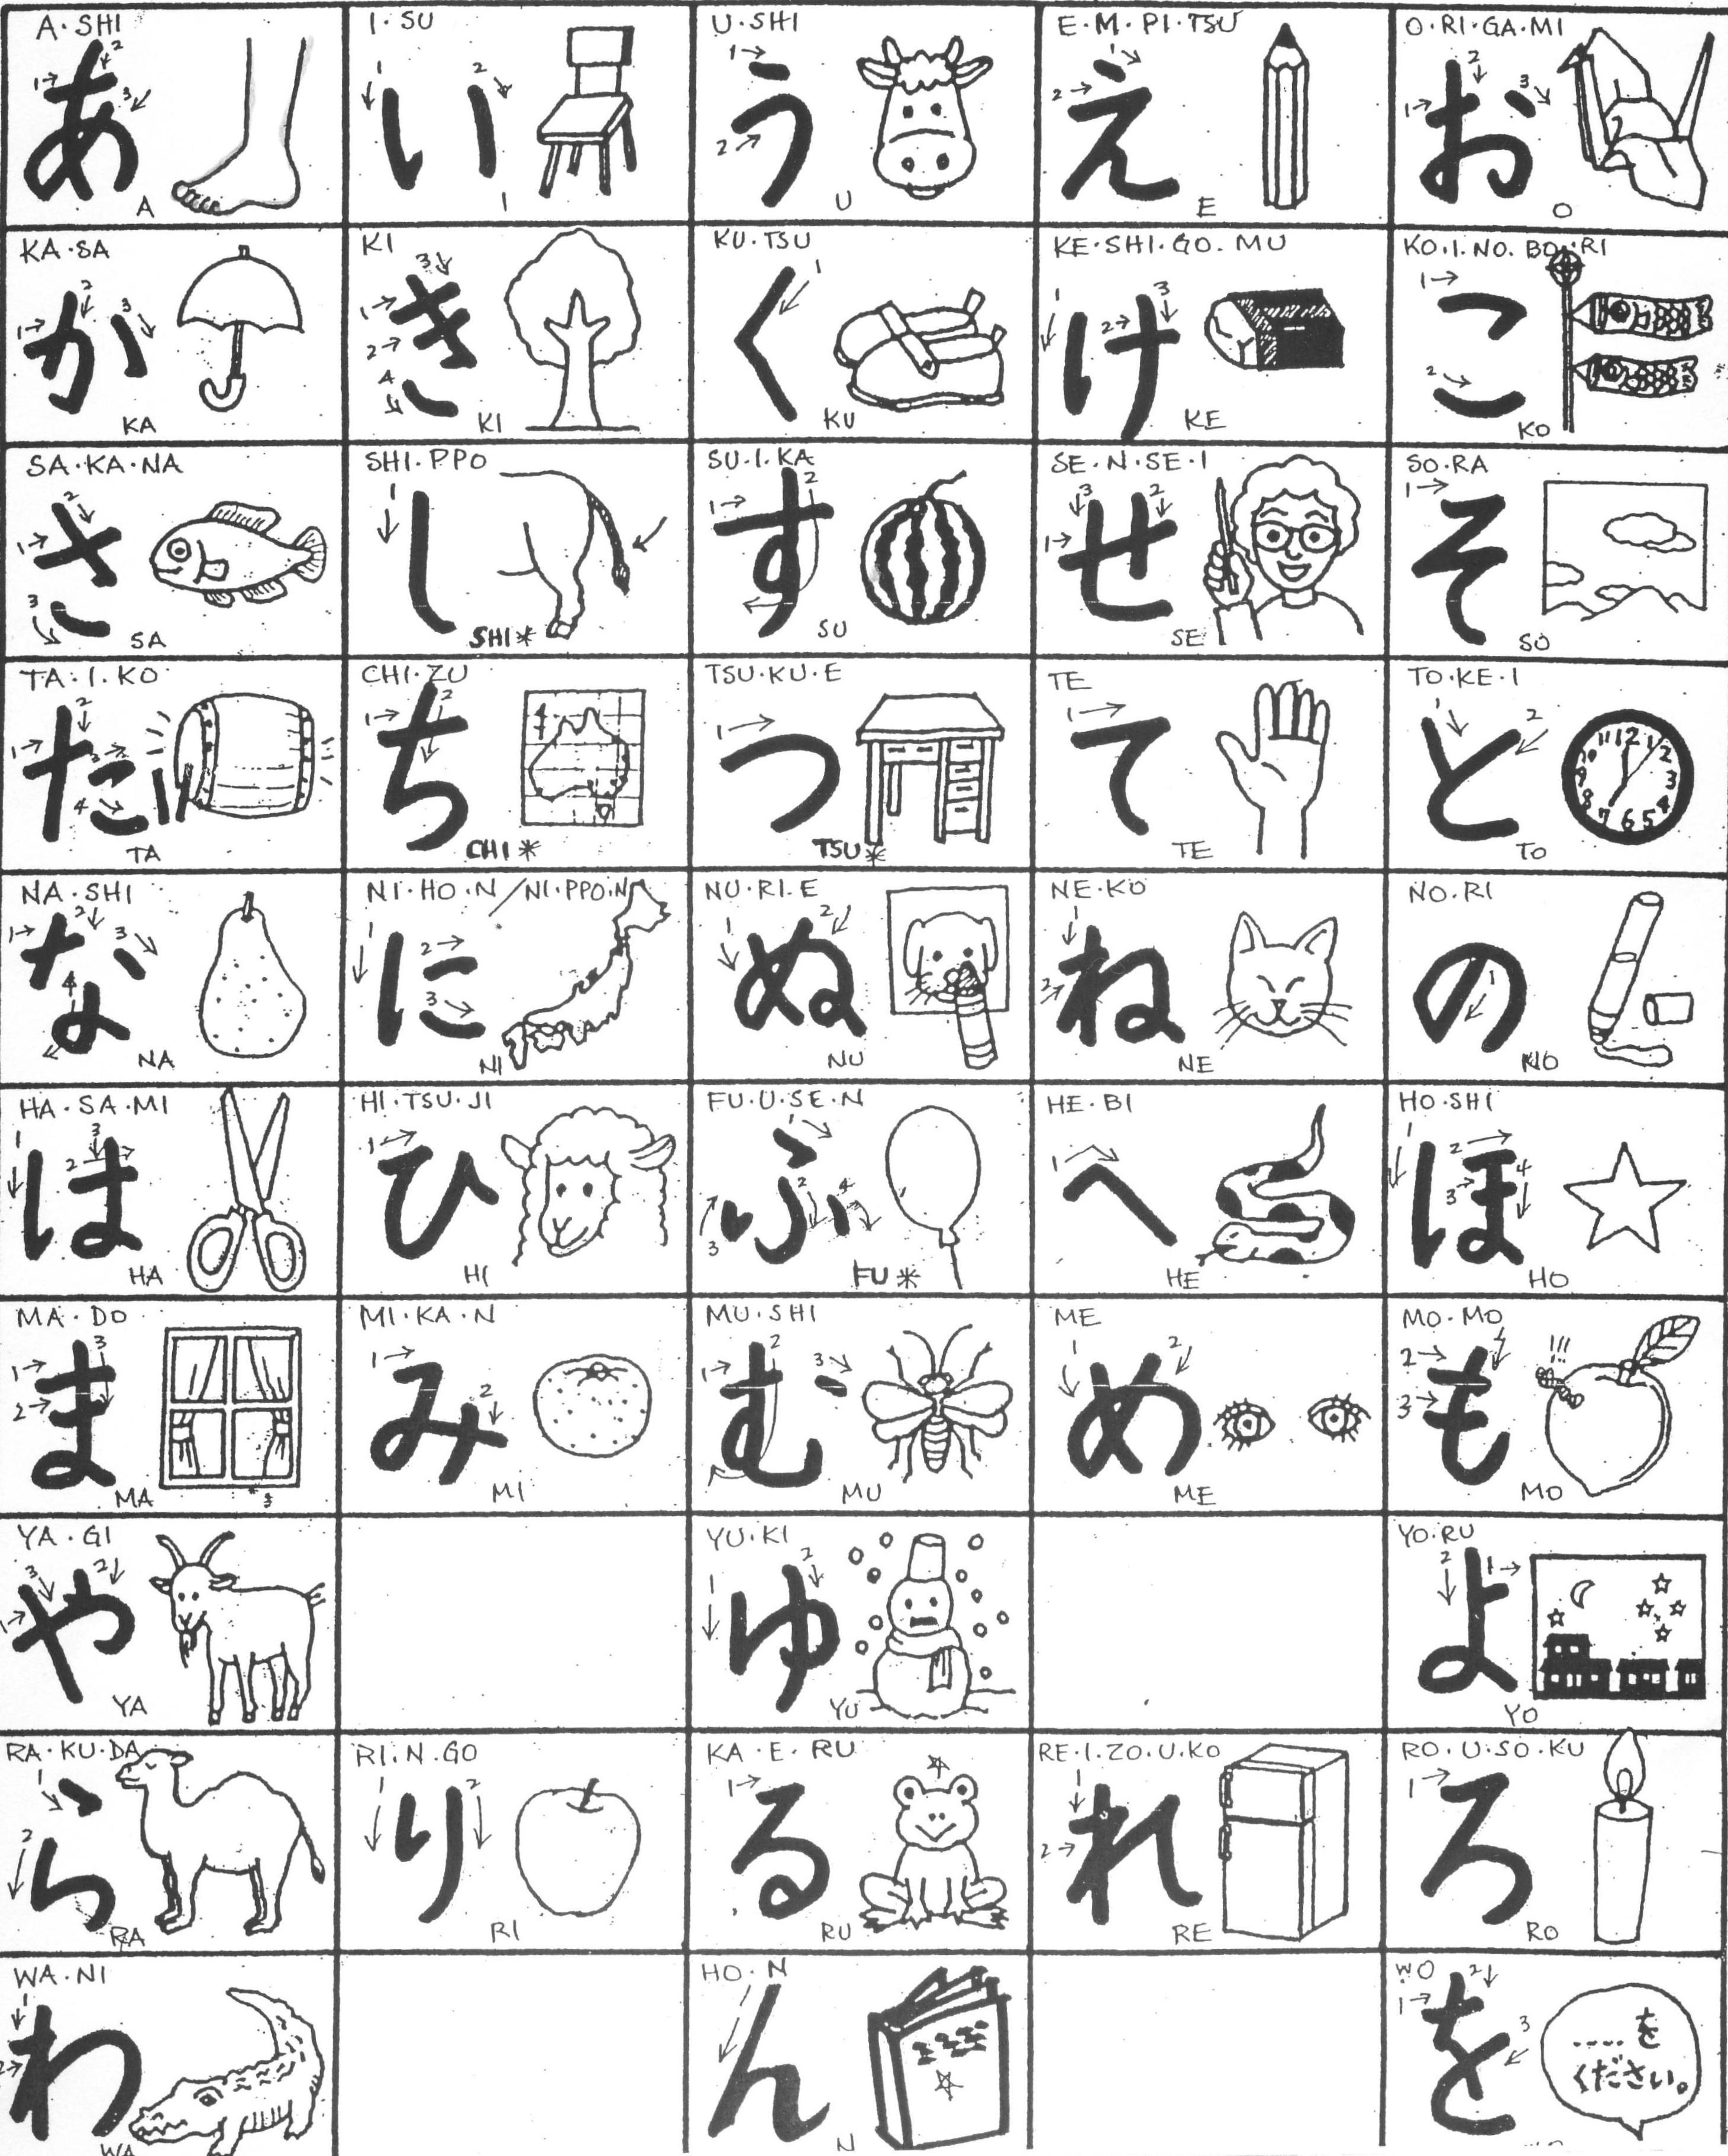 Japanese Alphabet Kanji Chart